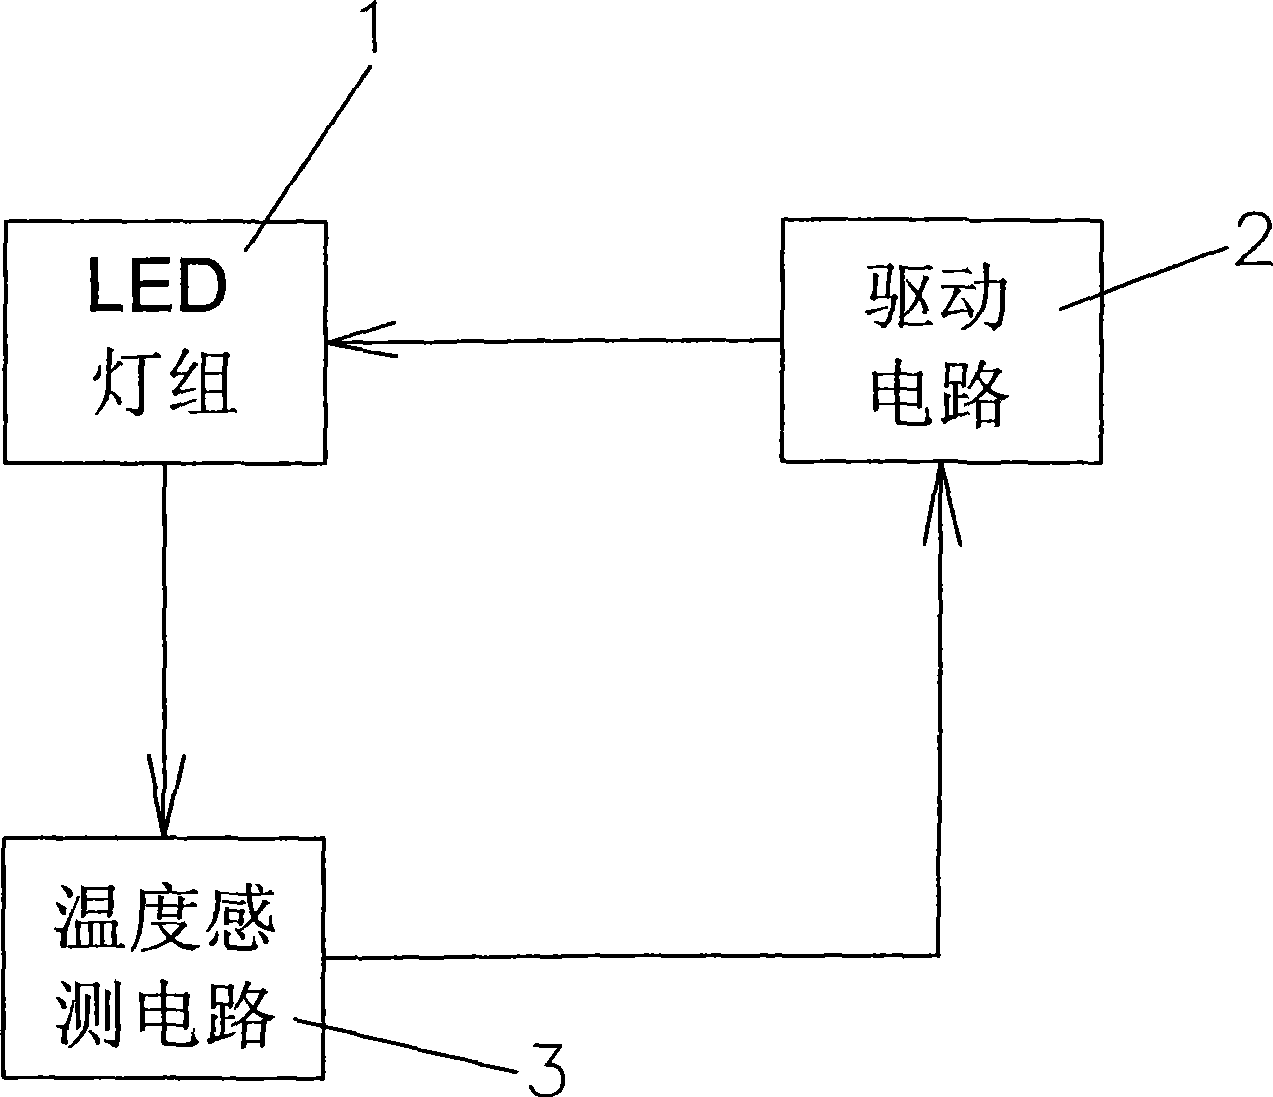 Control circuit for LED car lamp